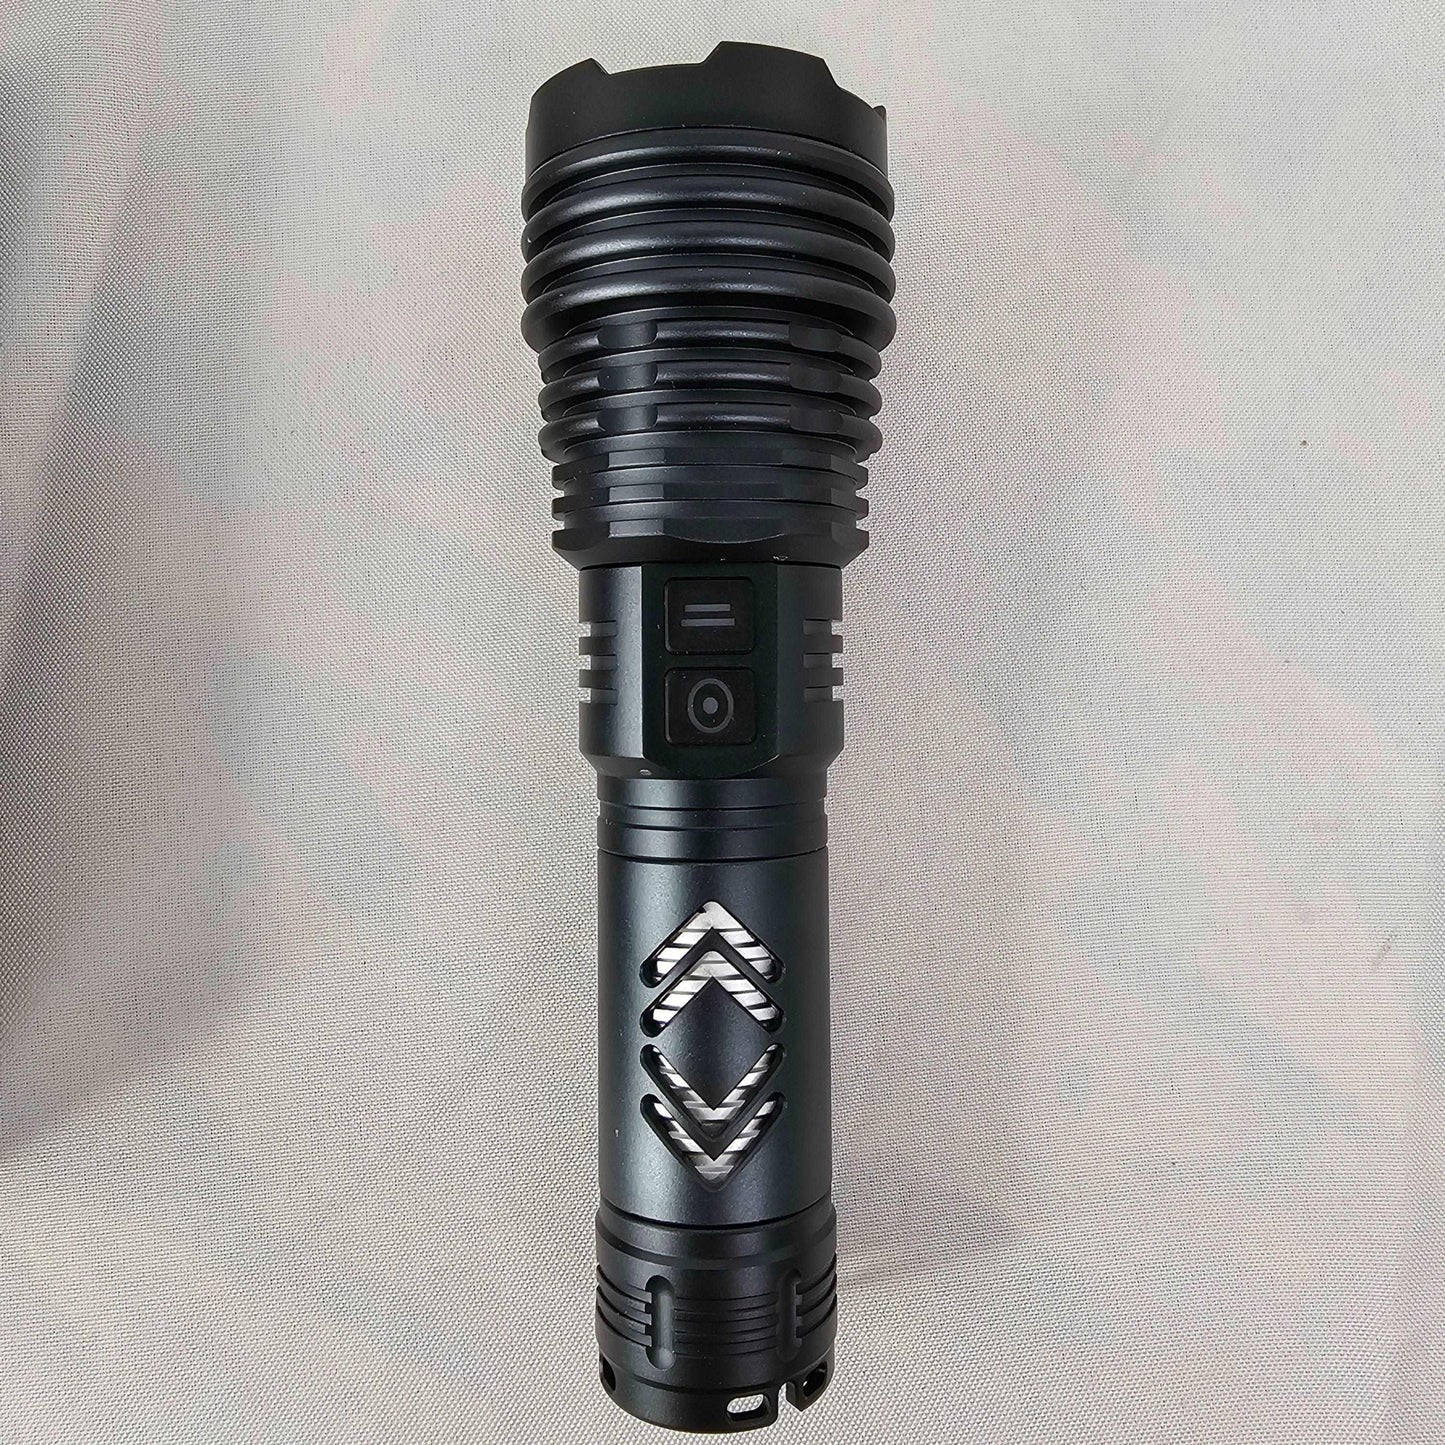 Flashlight High Lumen XHP 160.6 - DQ Distribution